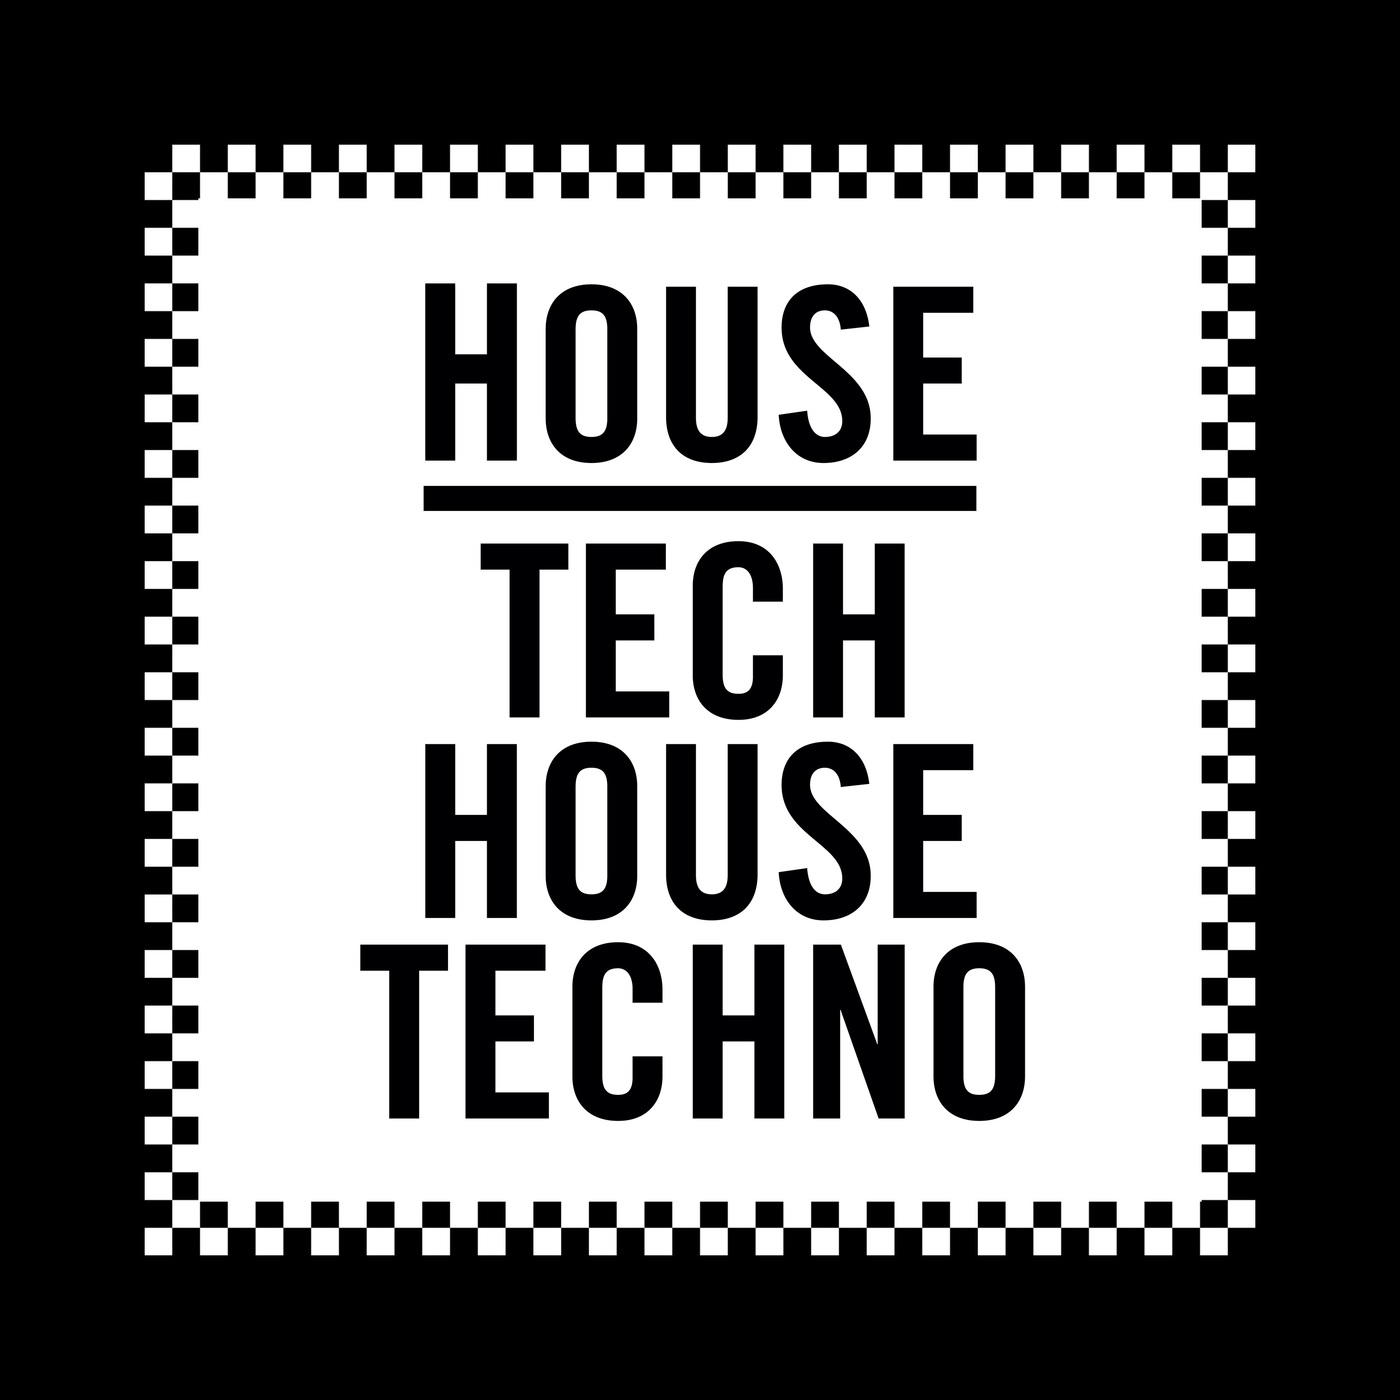 image cover: VA - House, Tech House, Techno Vol. 2 / Toolroom